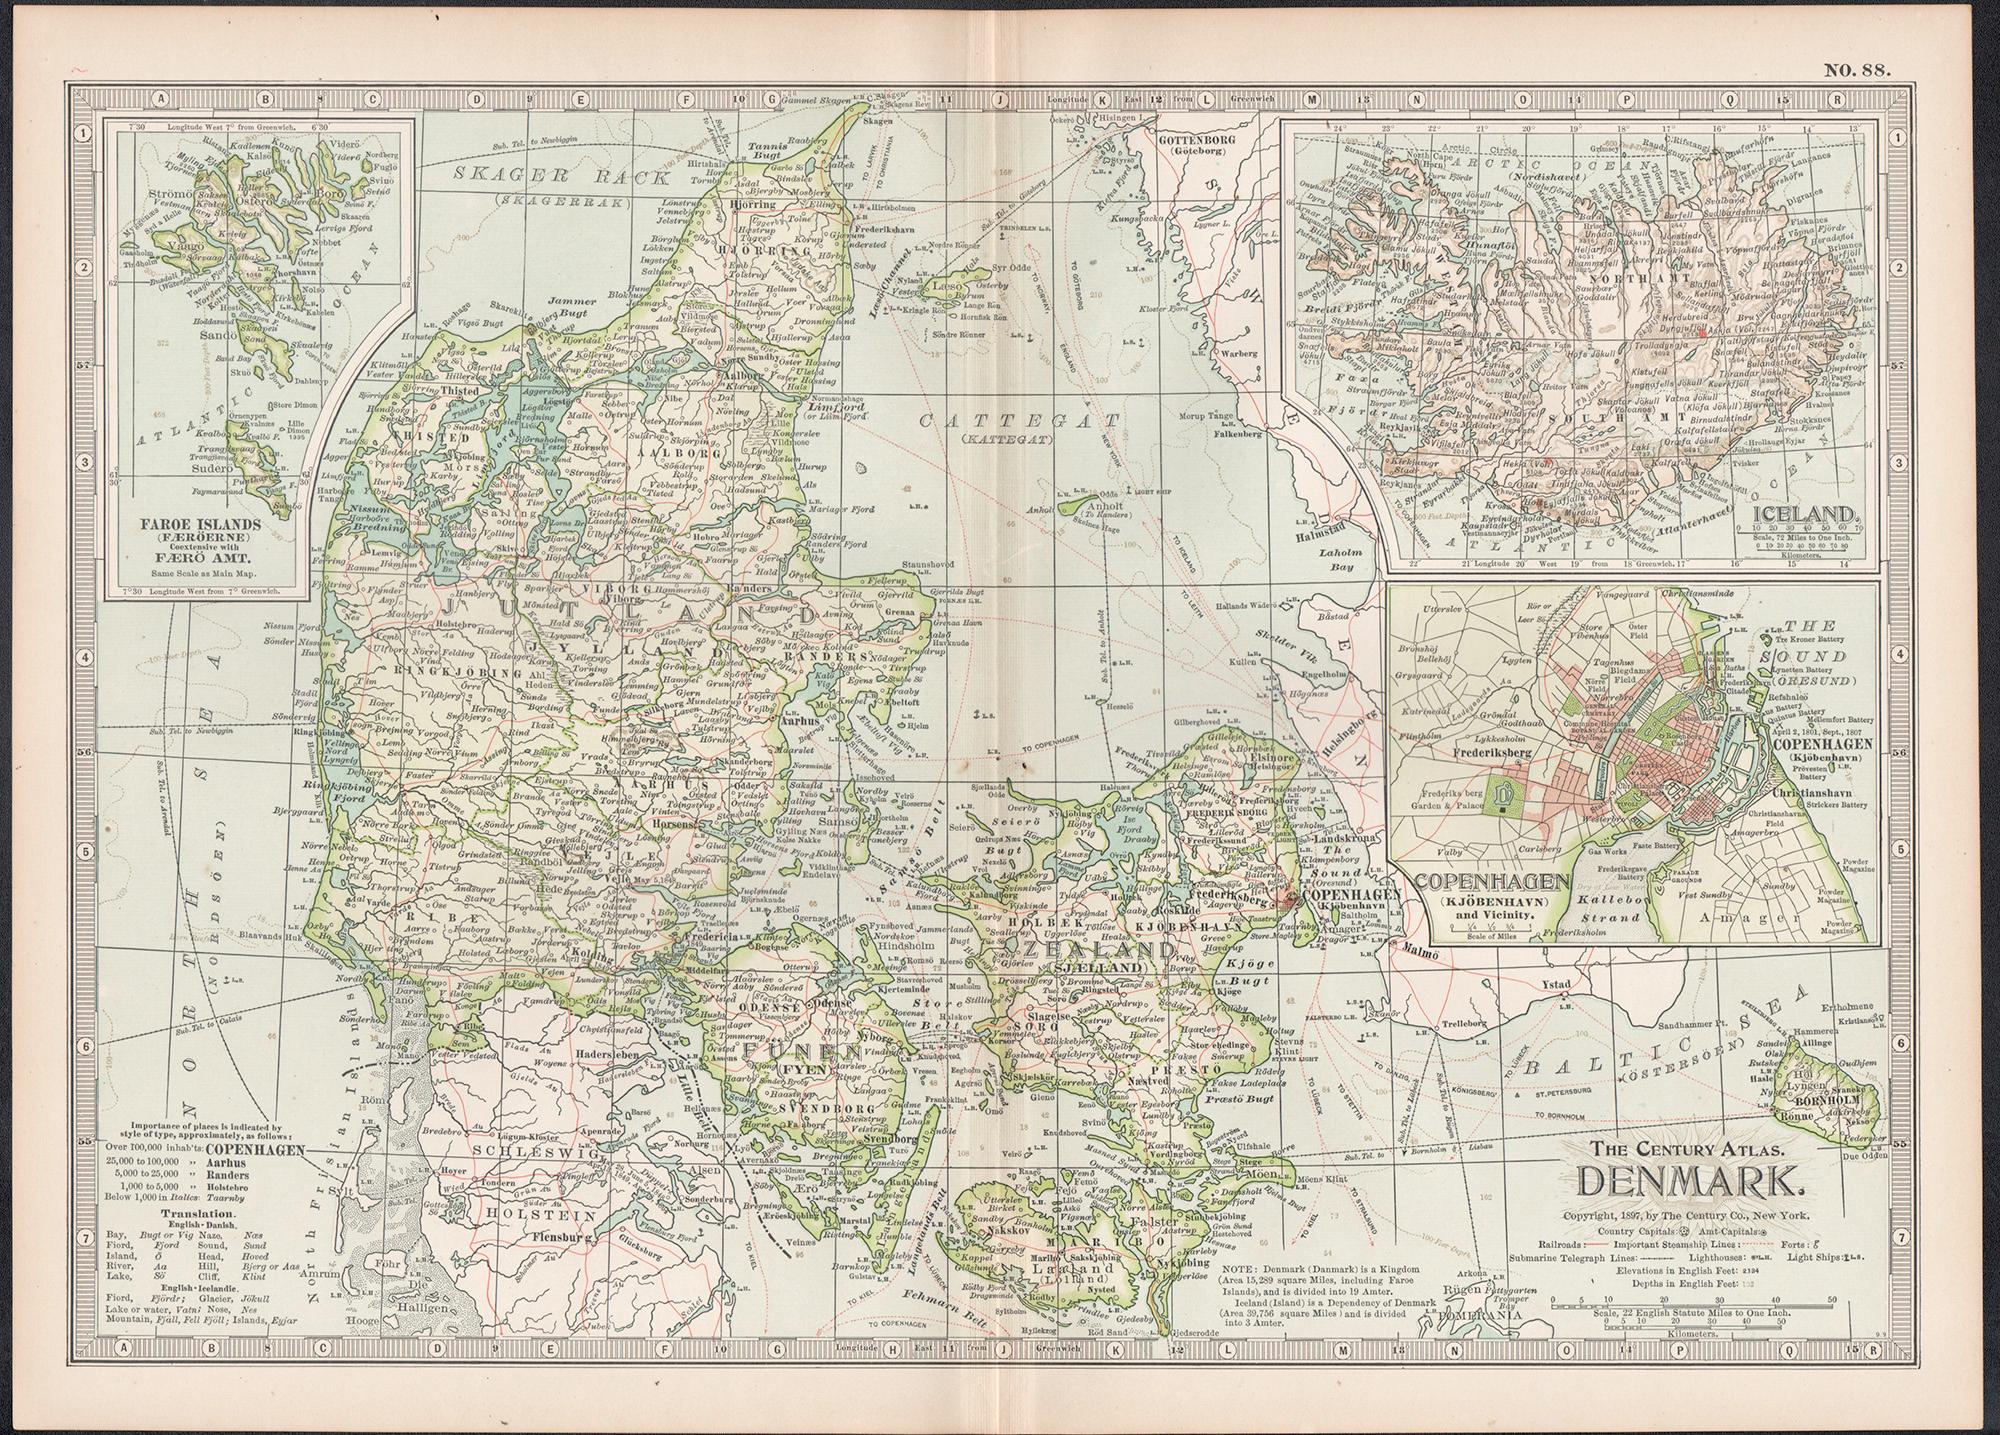 Denmark. Century Atlas antique vintage map - Print by Unknown